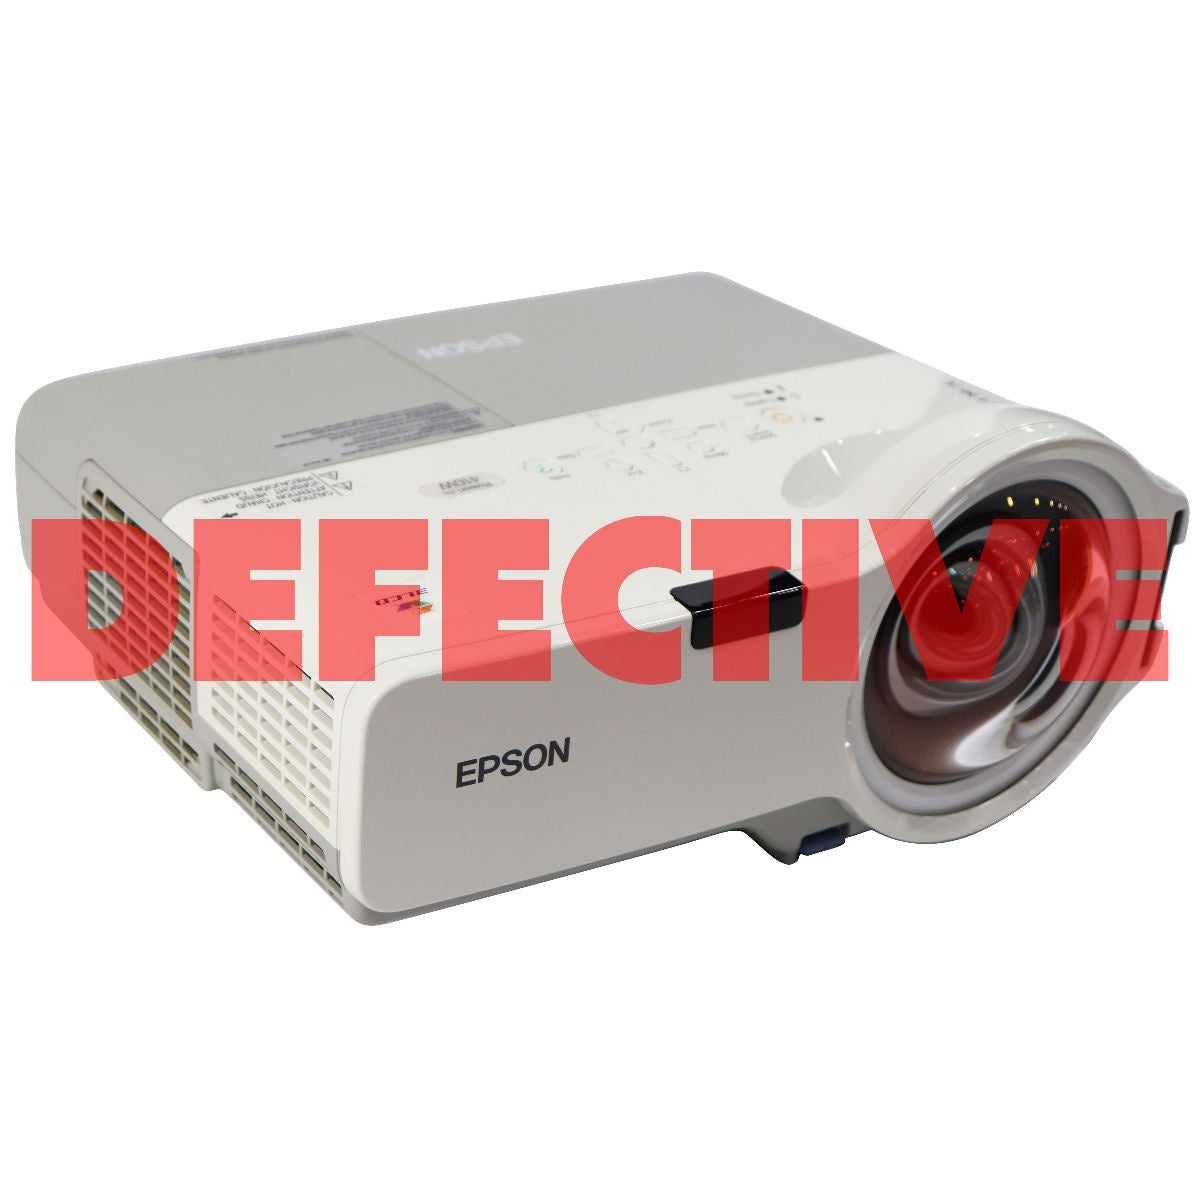 Epson PowerLite 410W Multimedia 2000 Lumen (1280 x 800) Projector Digital Displays - Projectors Epson    - Simple Cell Bulk Wholesale Pricing - USA Seller